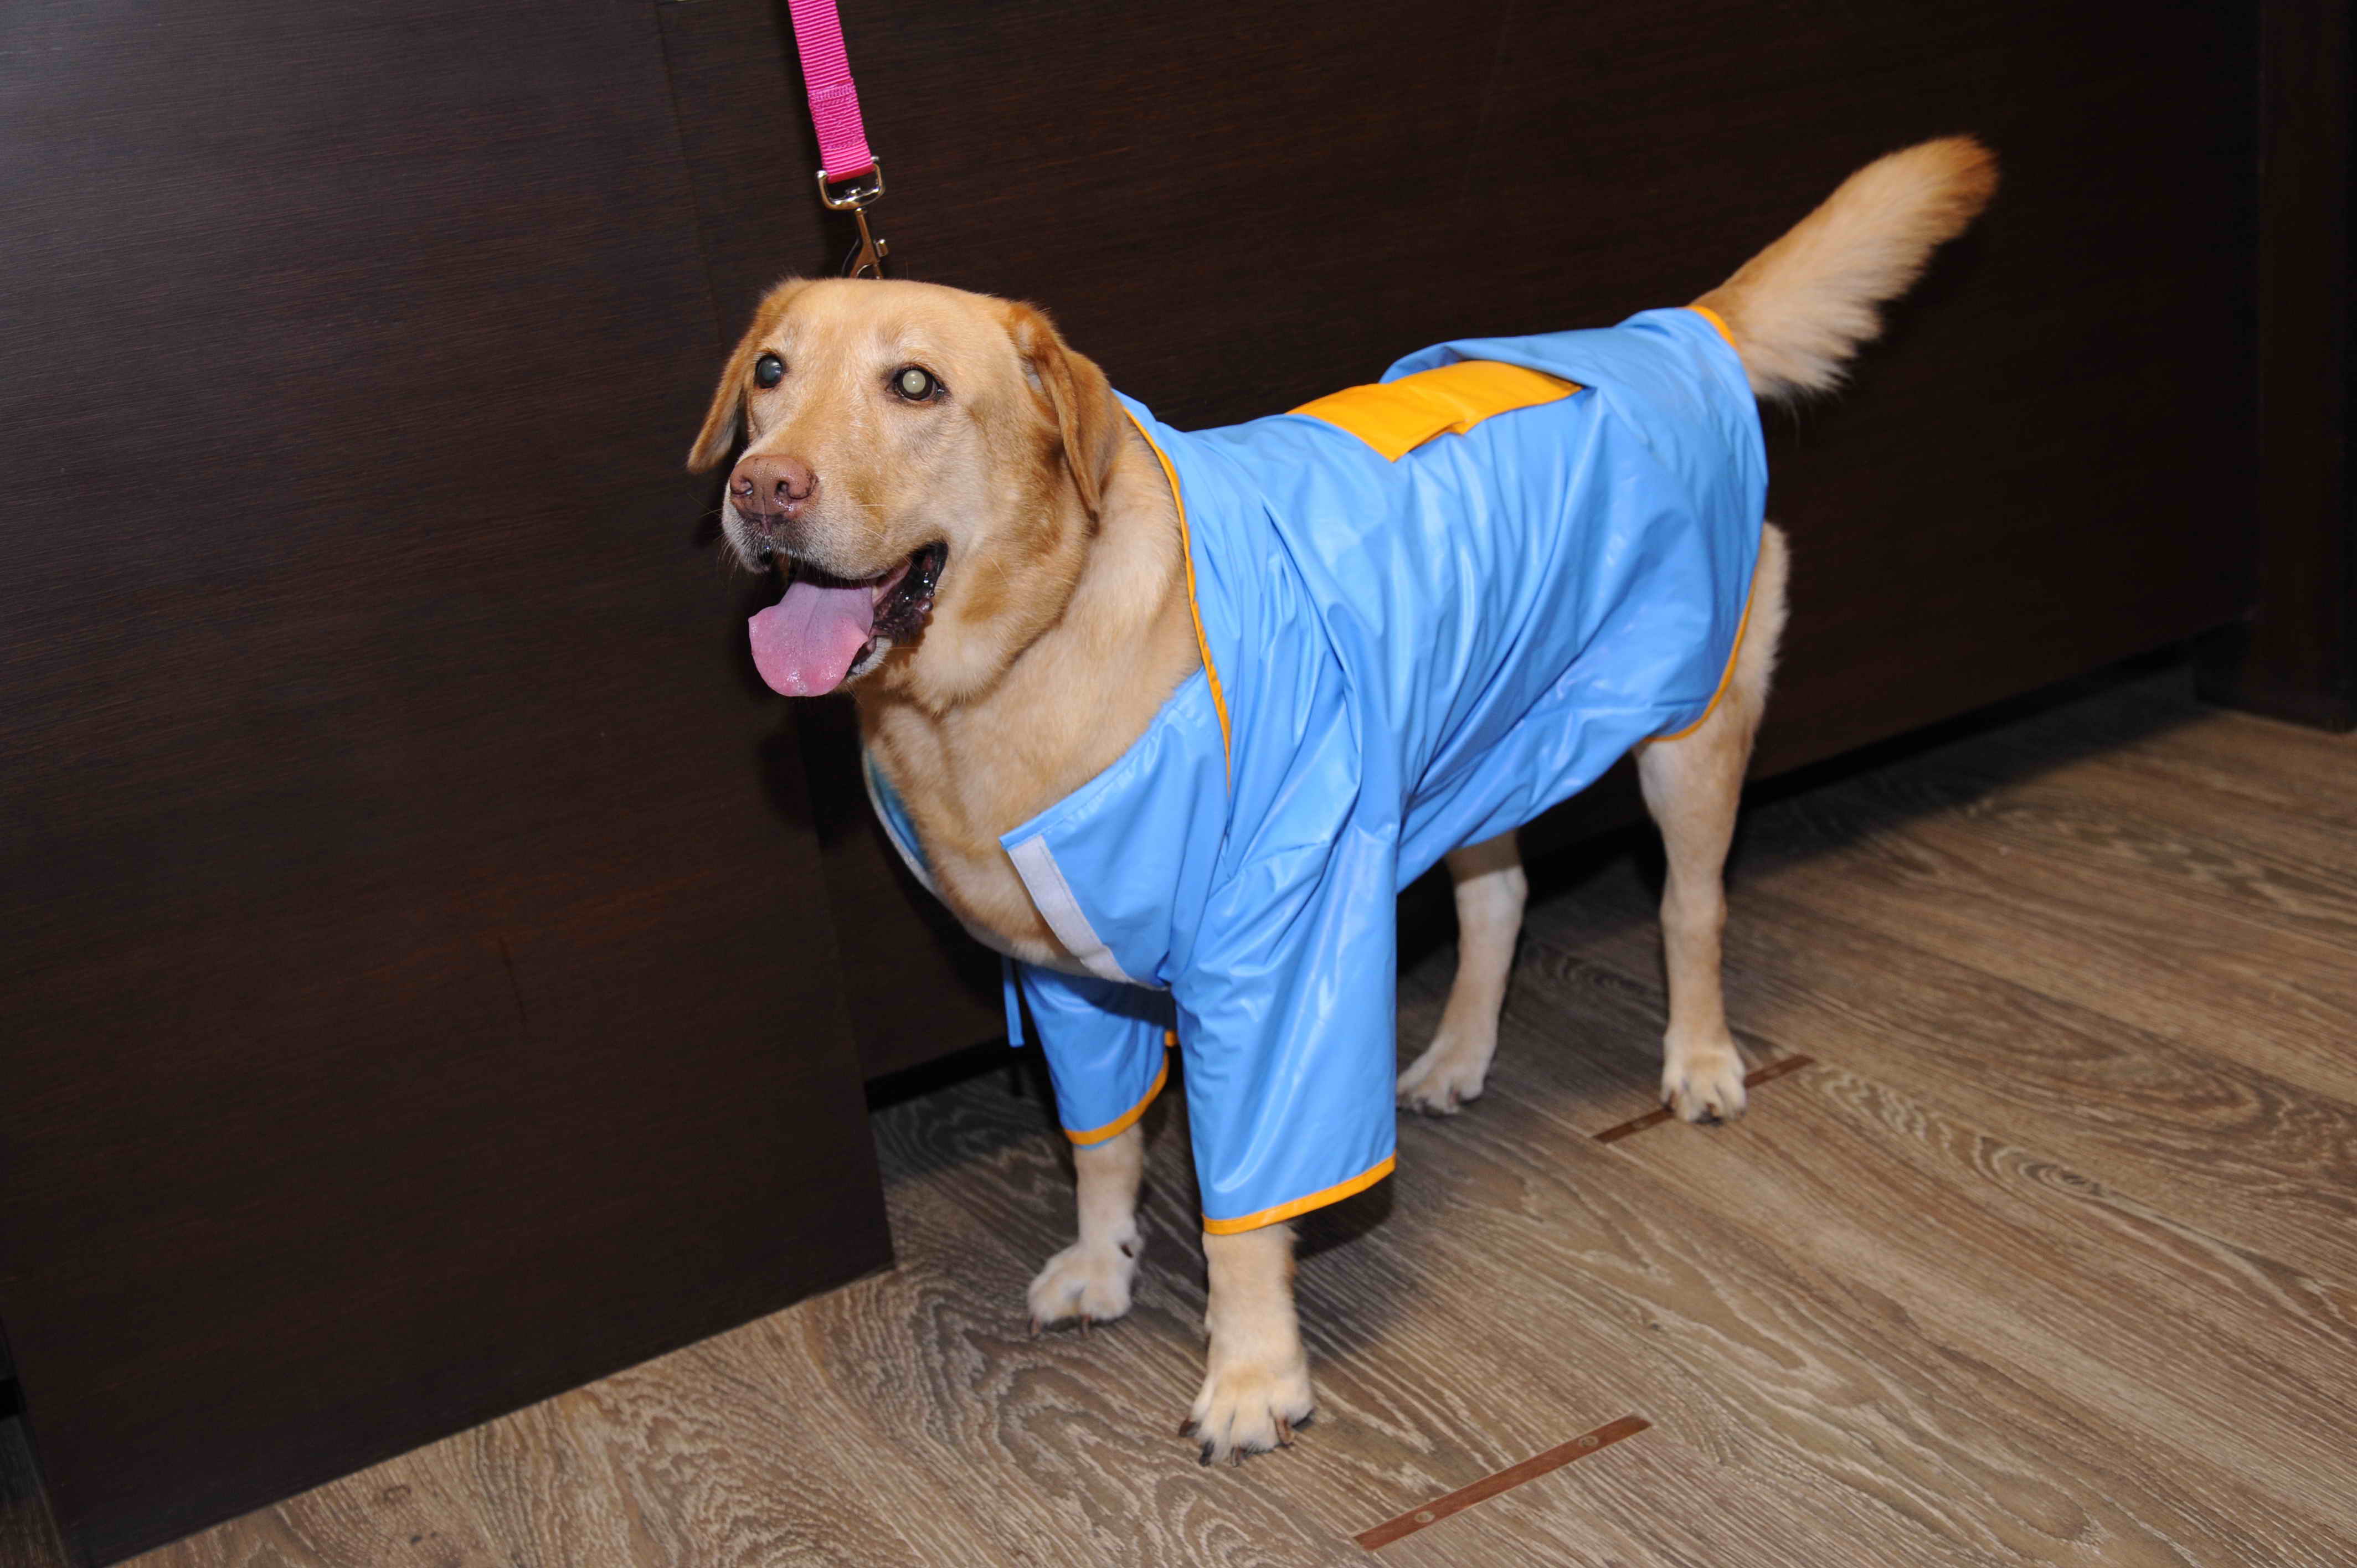 Dog in sonya raincoat